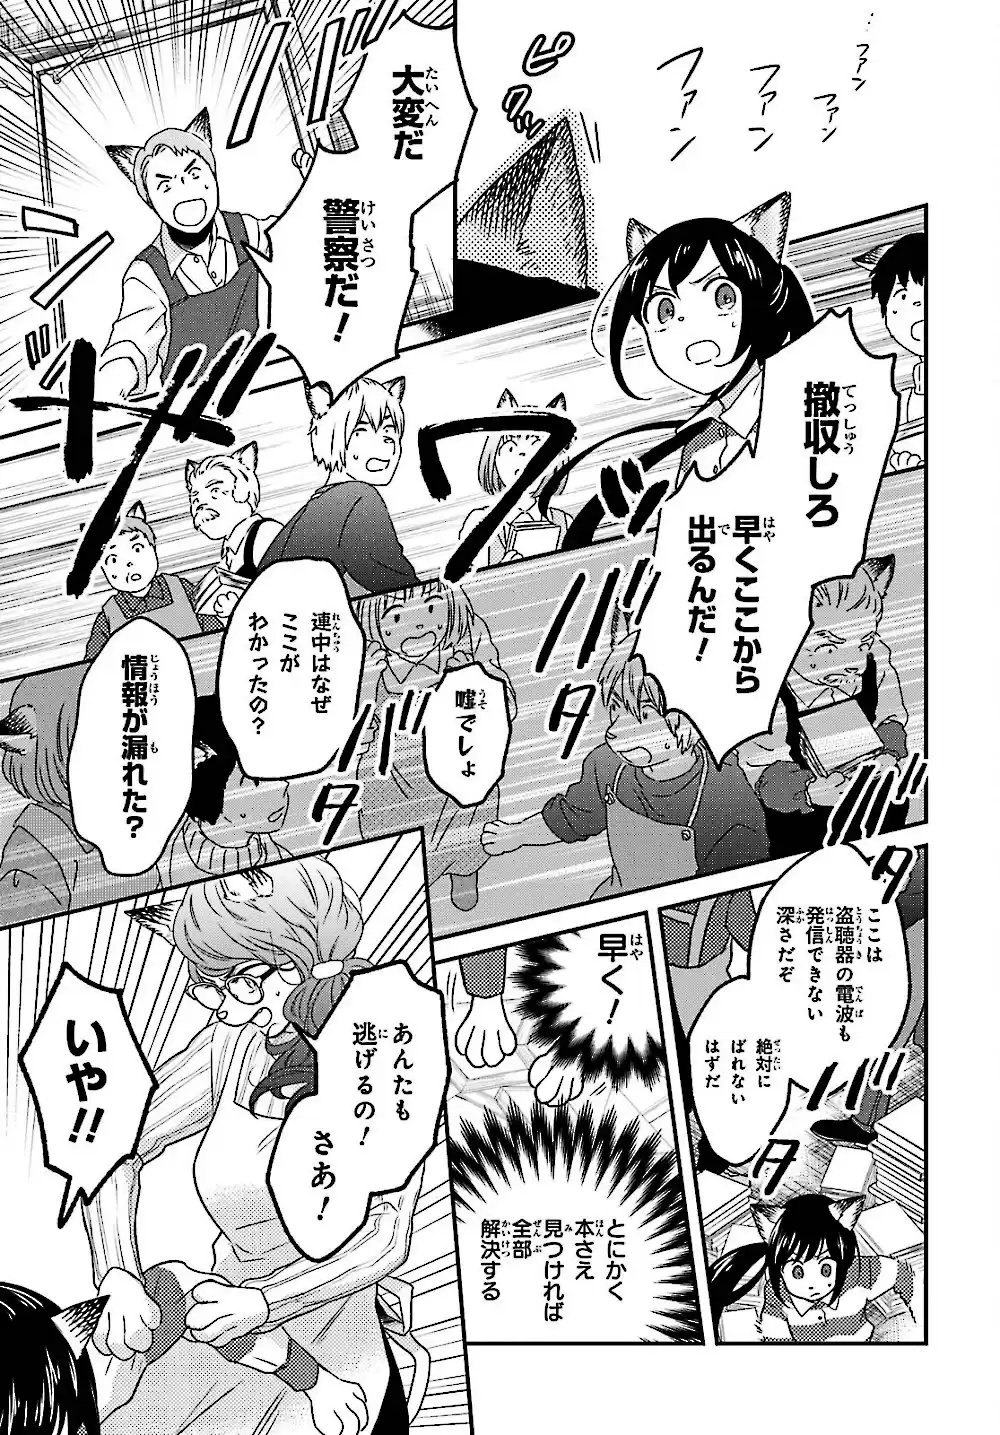 26 Manga E6is